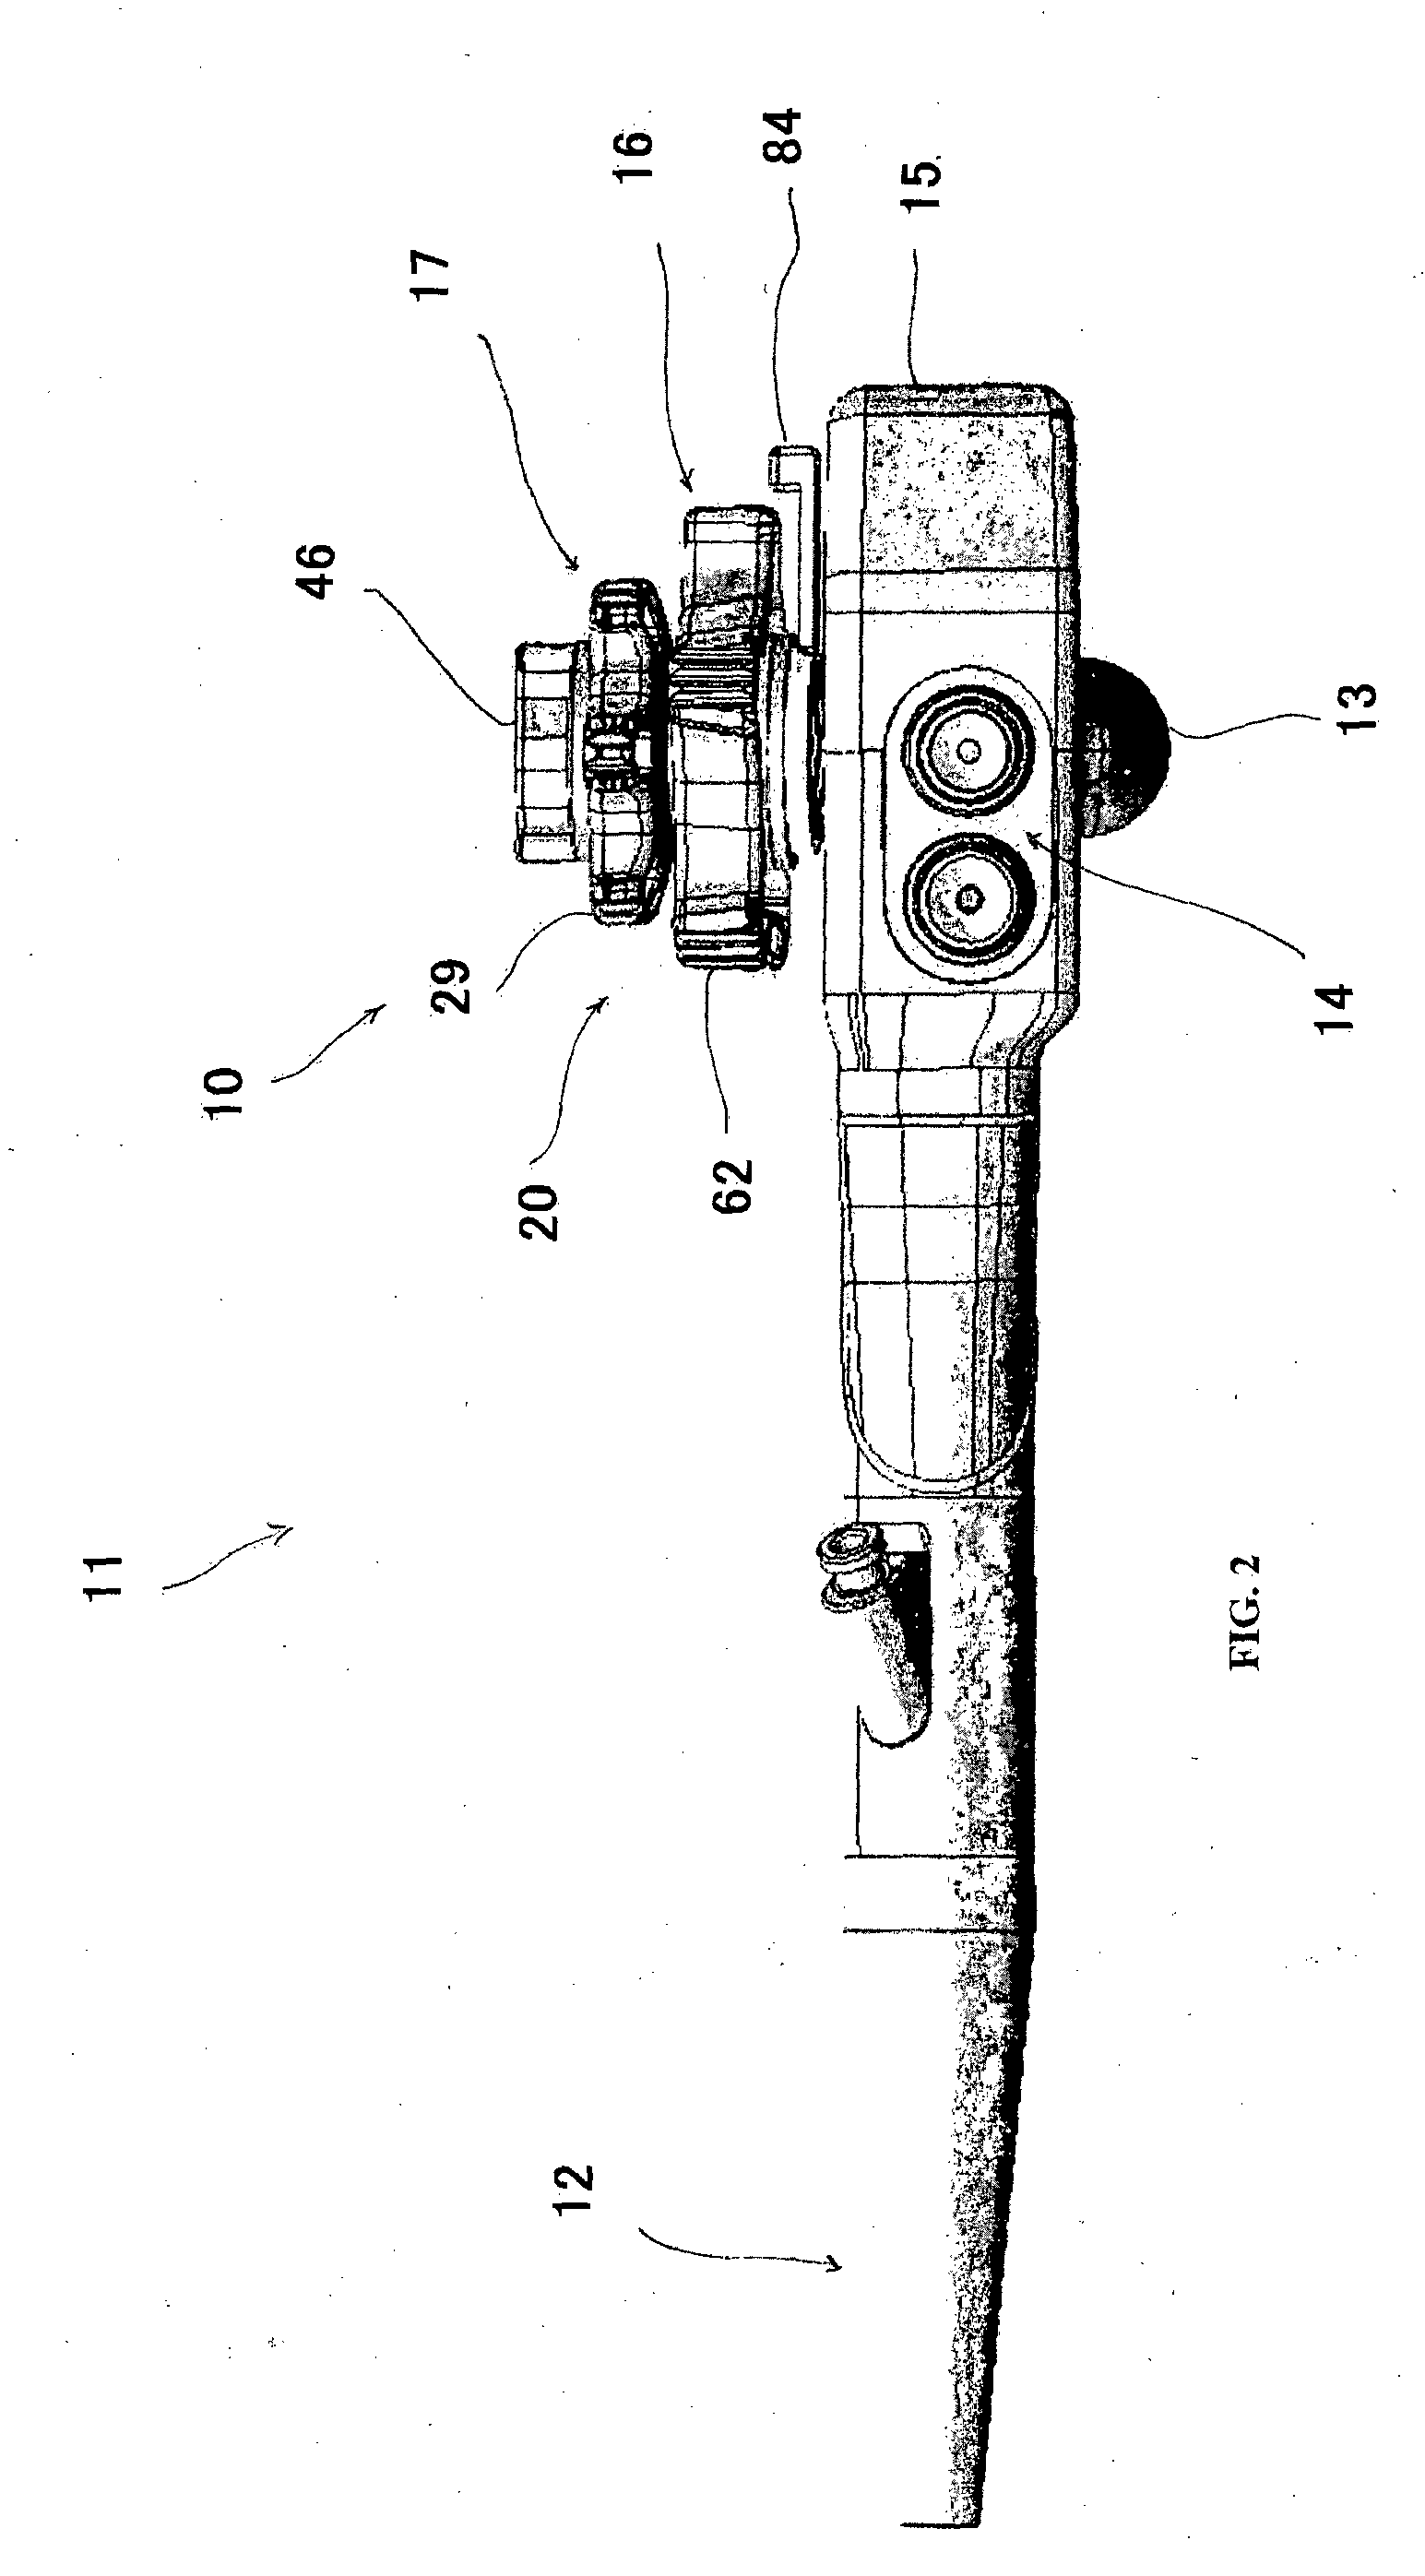 Endoscope operating apparatus